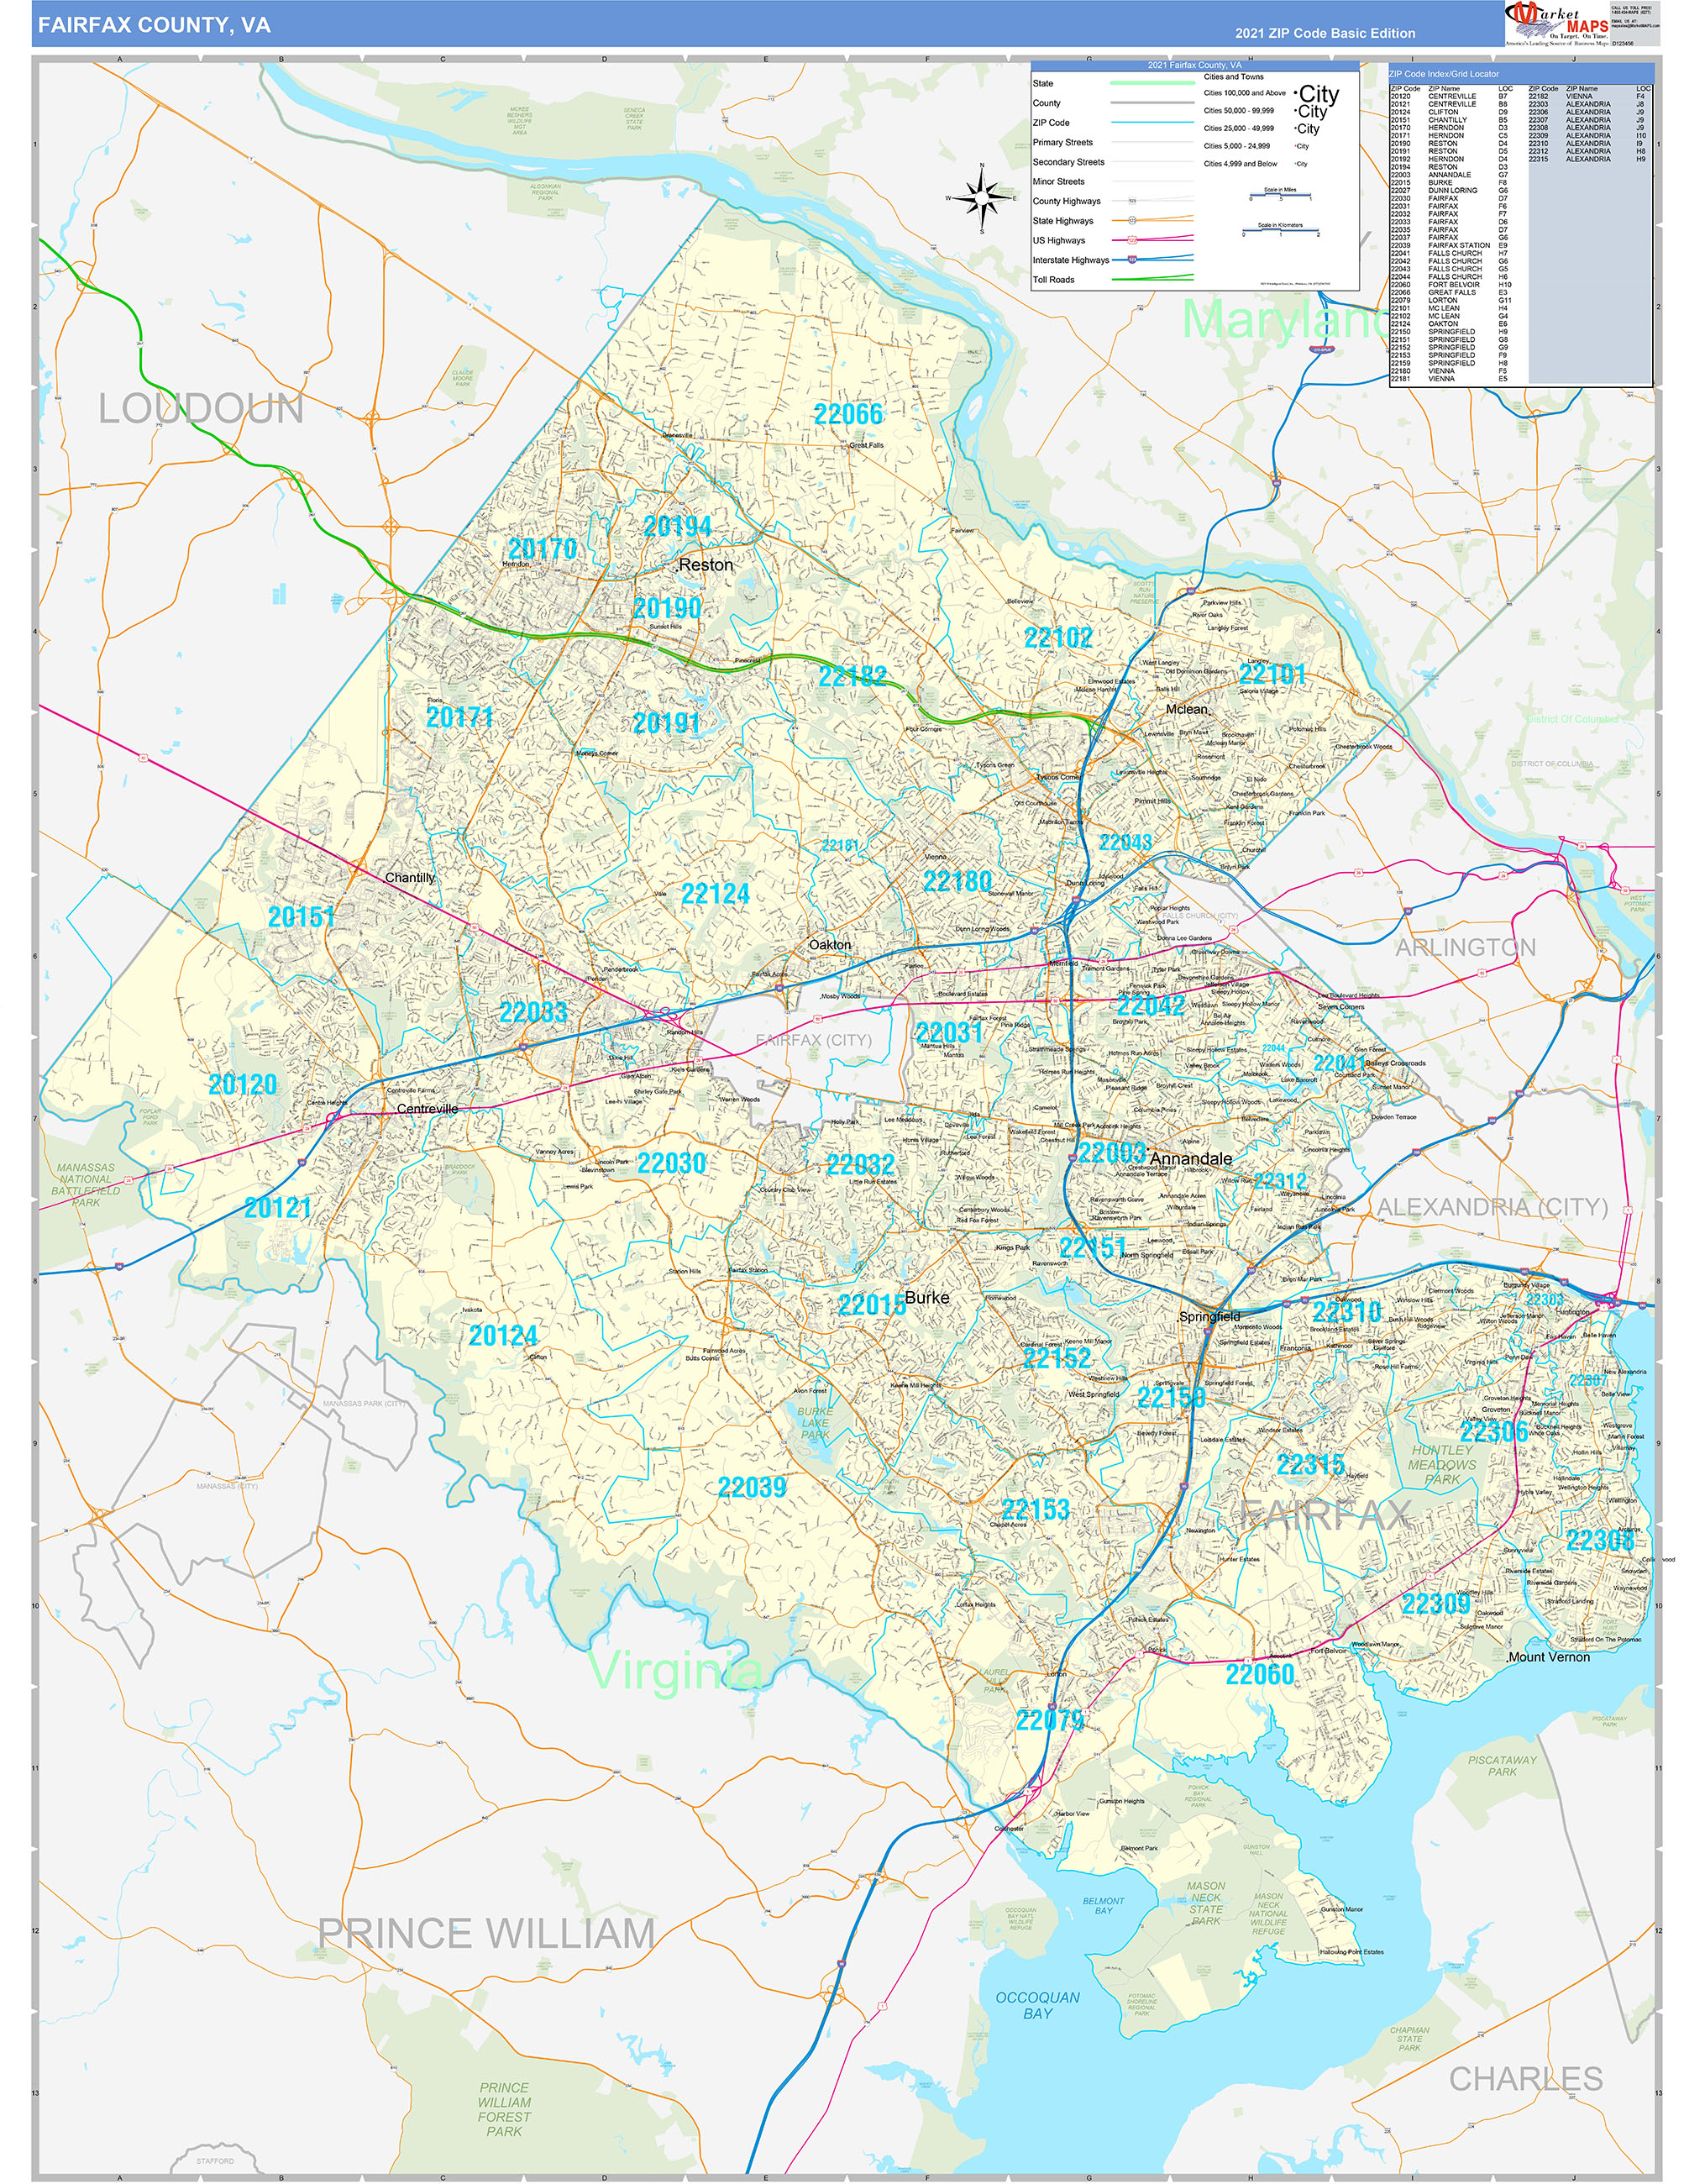 Fairfax County, VA Zip Code Wall Map Basic Style by MarketMAPS MapSales